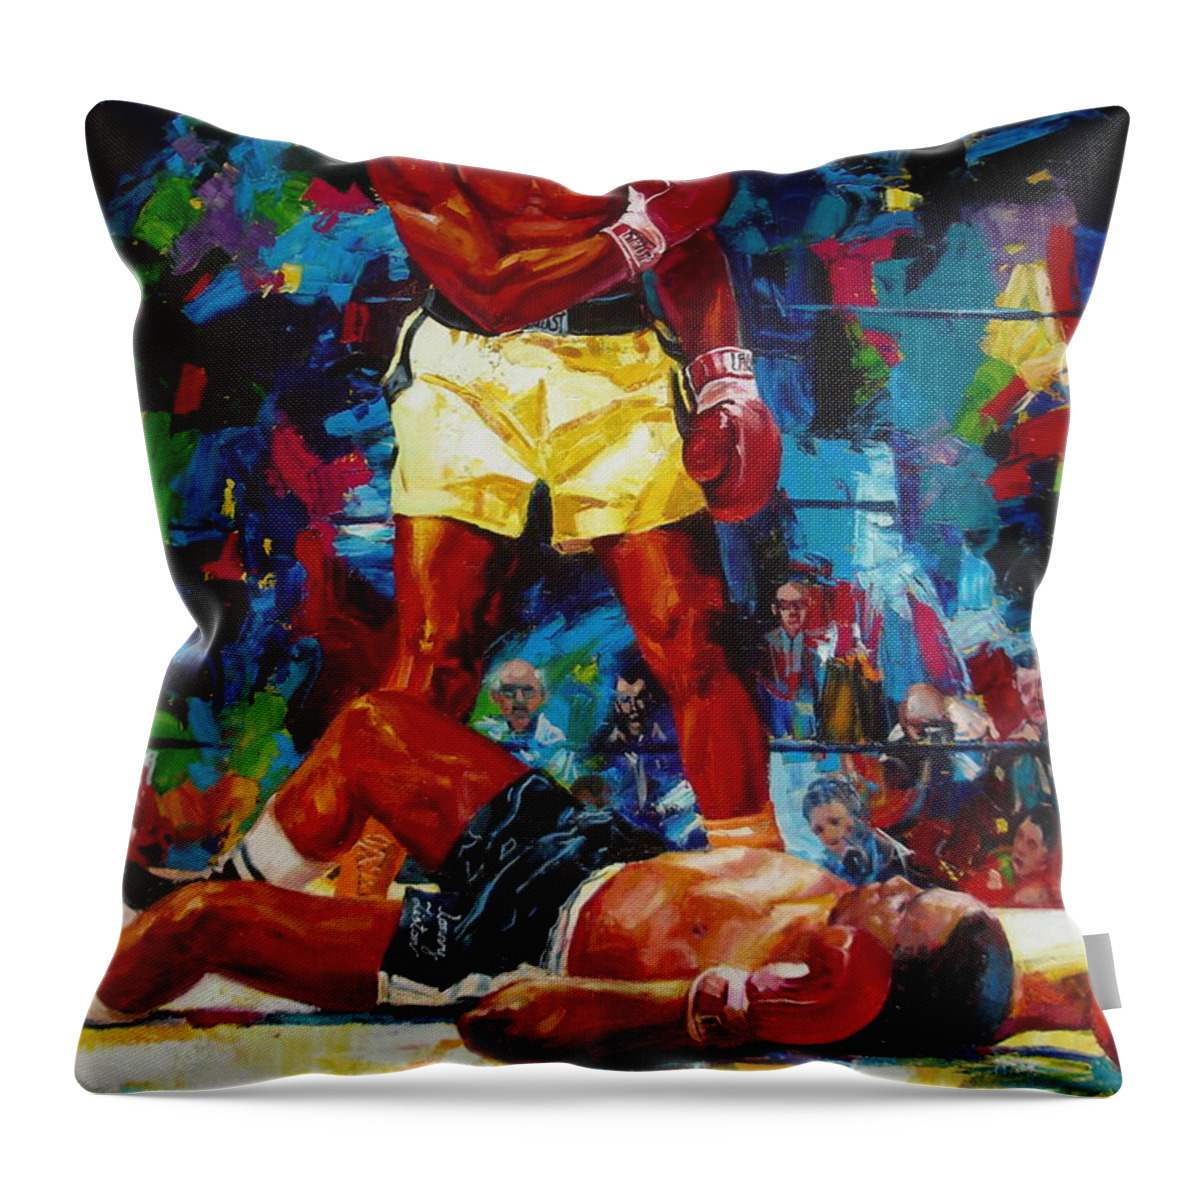 Ignatenko Throw Pillow featuring the painting Muhammad Ali by Sergey Ignatenko